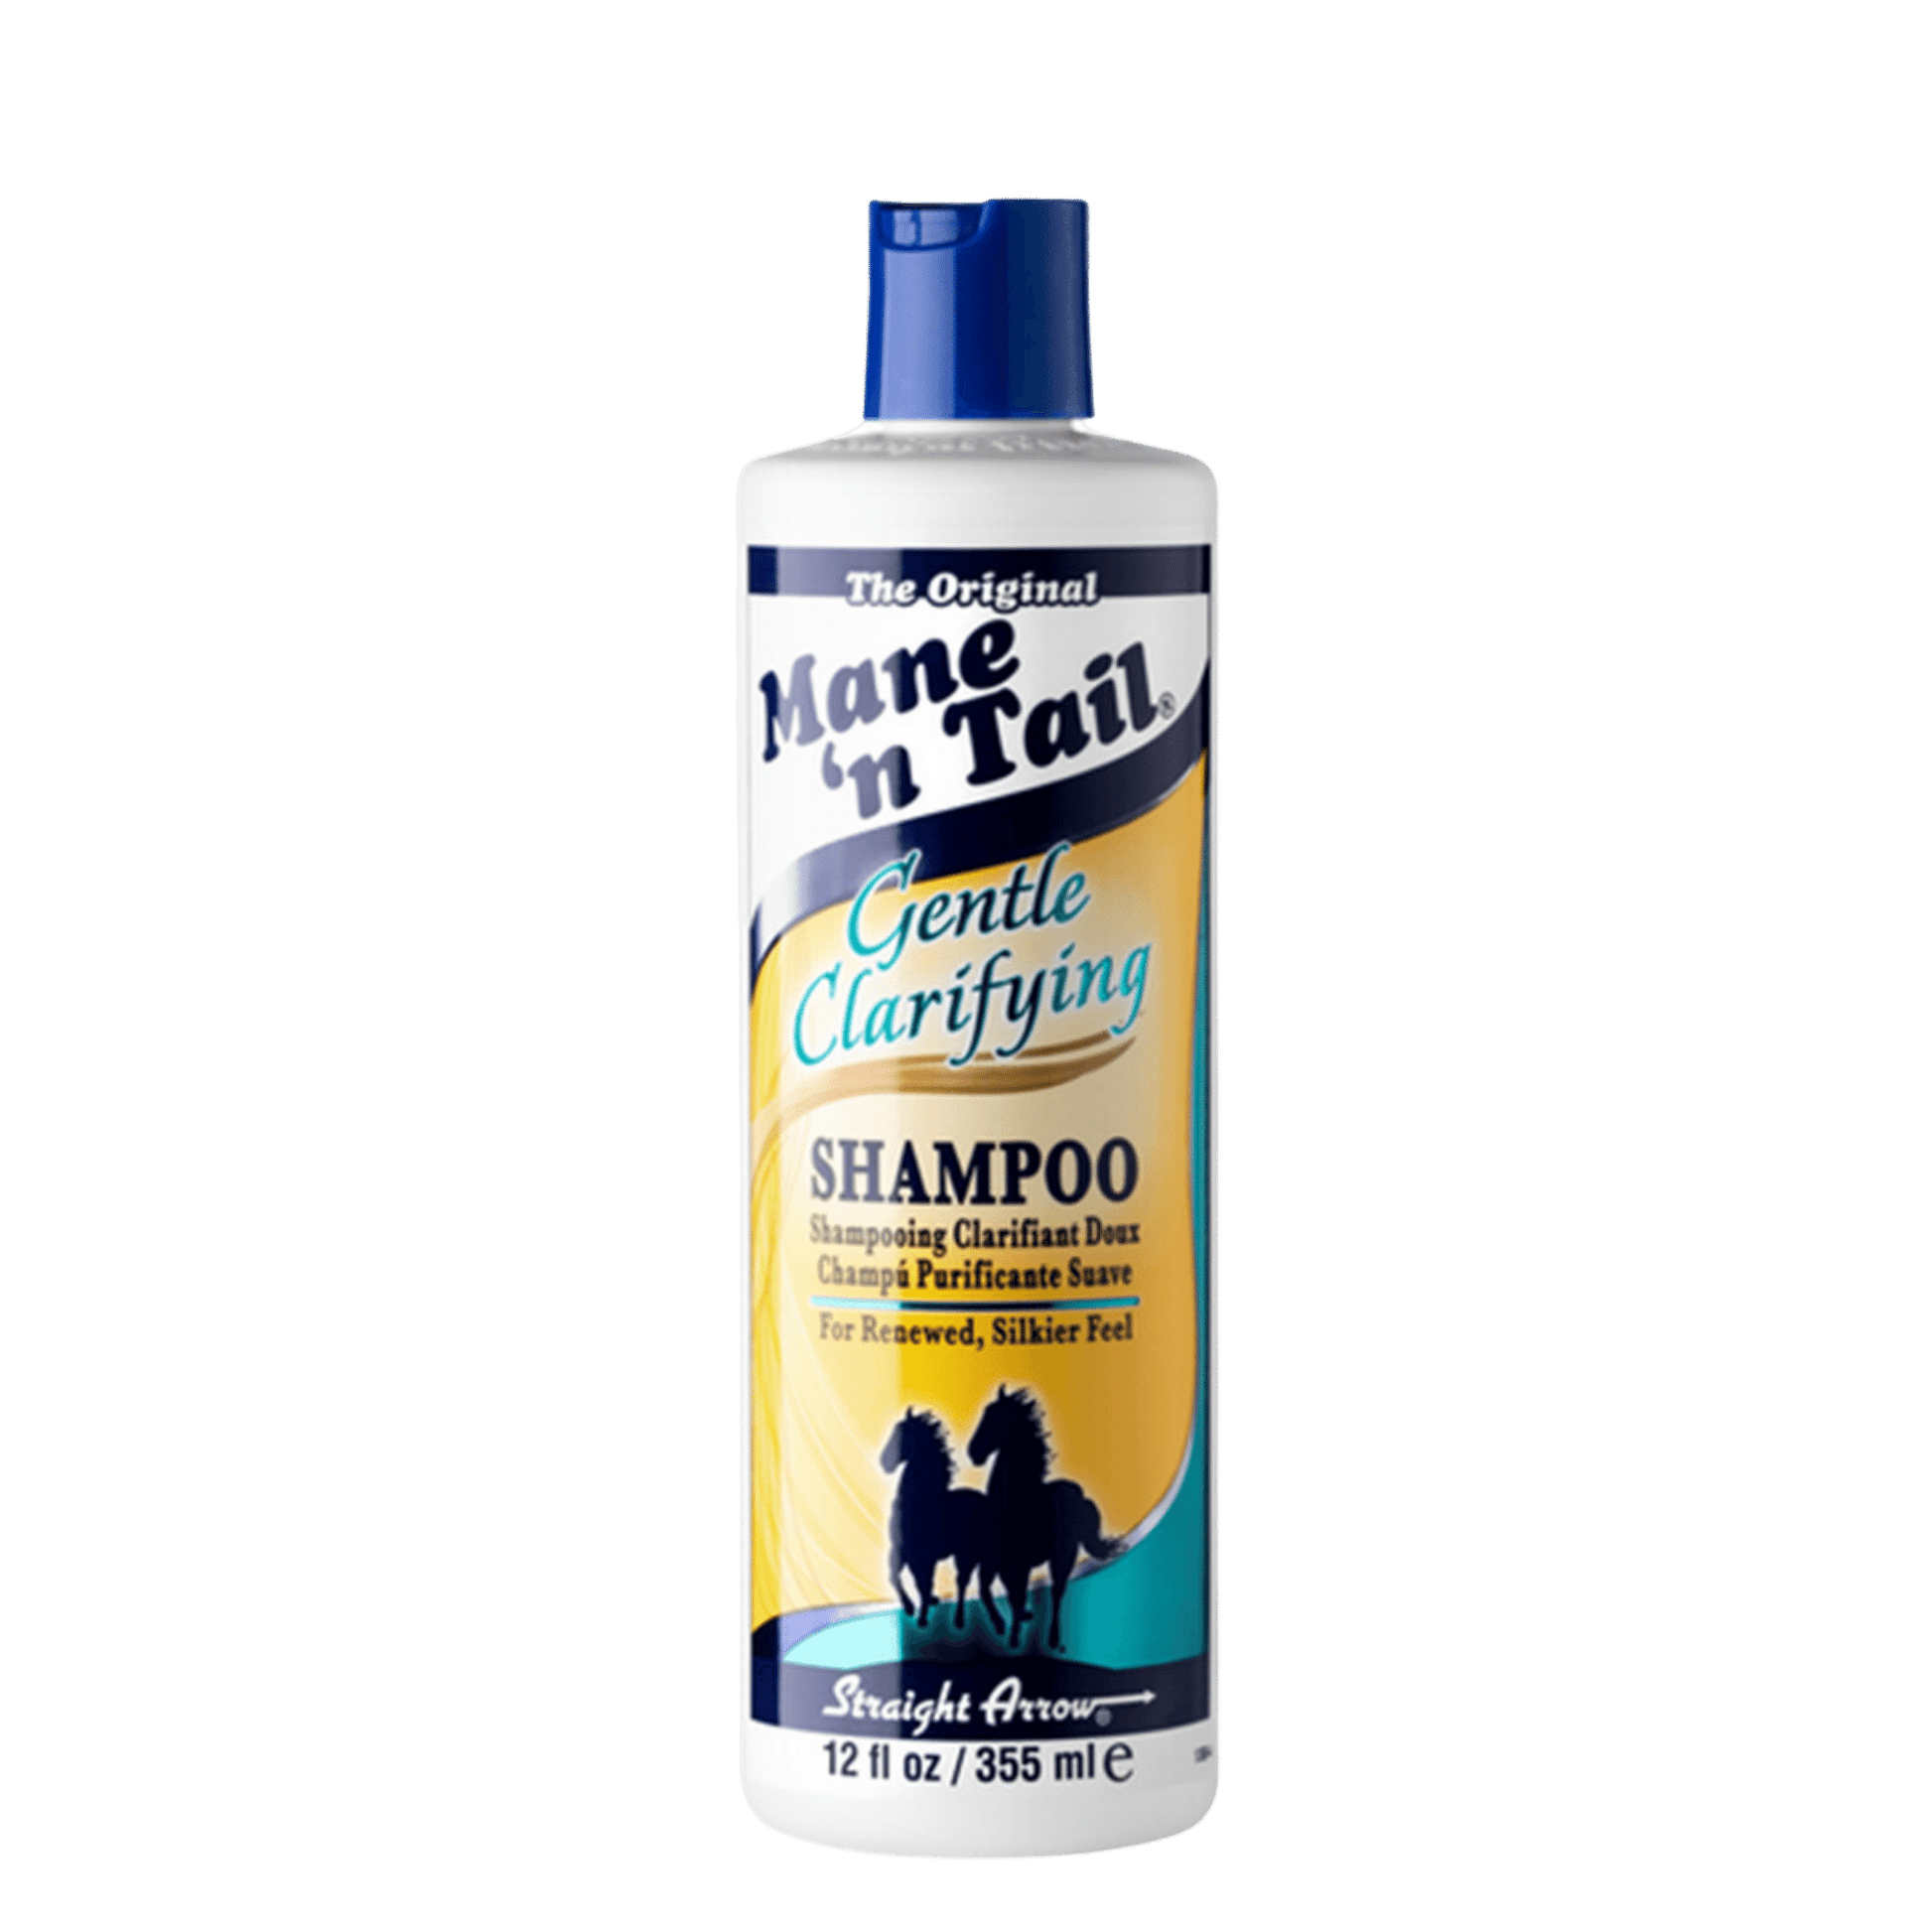 The Original Mane n Tail Gentle Clarifying Shampoo skinstash in Pakistan